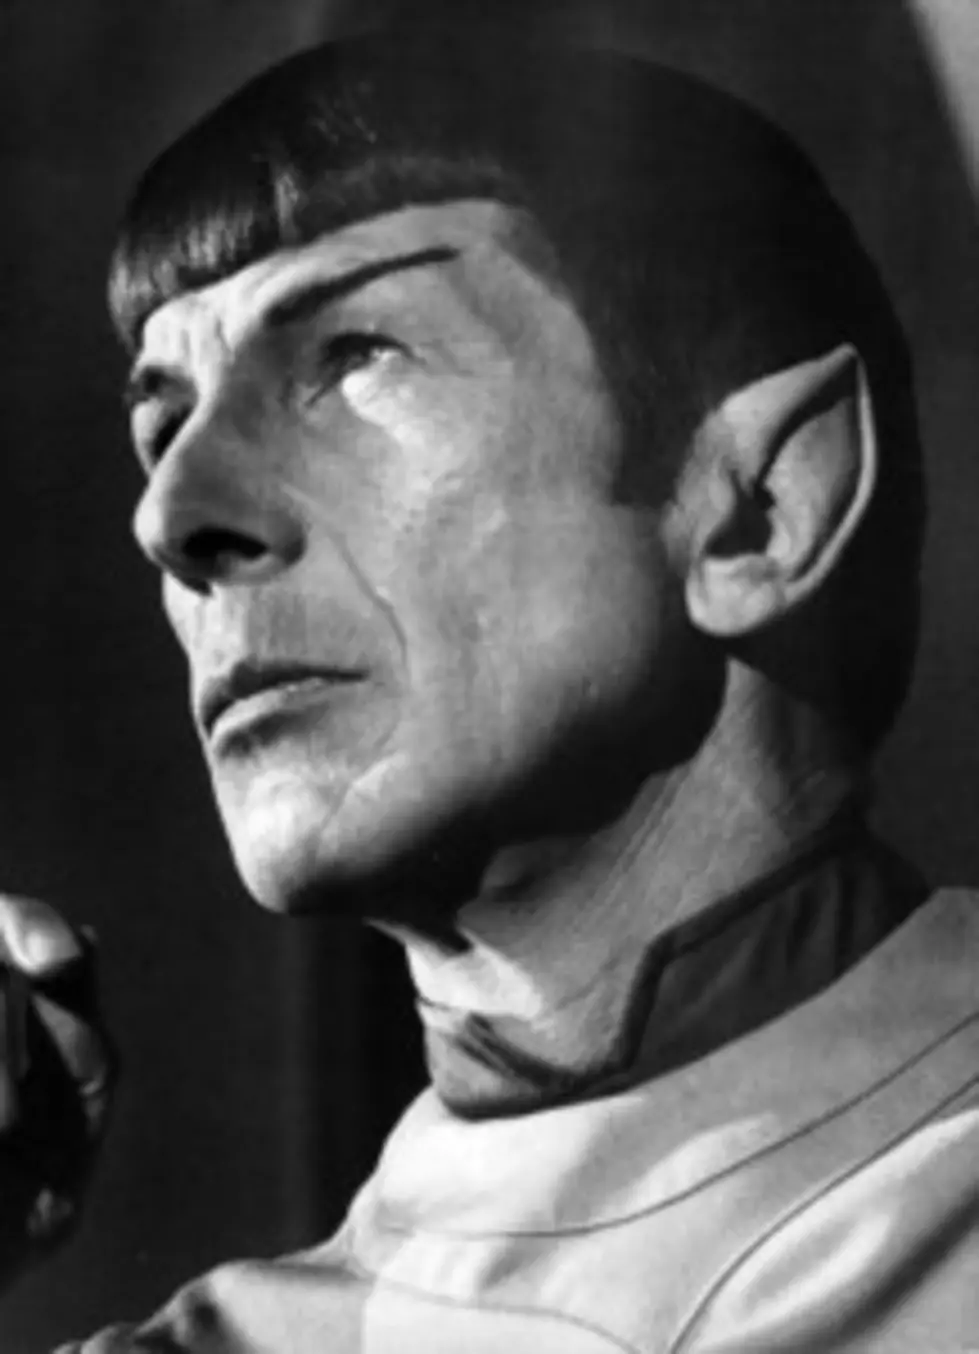 Leonard Nimoy (Mr. Spock) Dying?